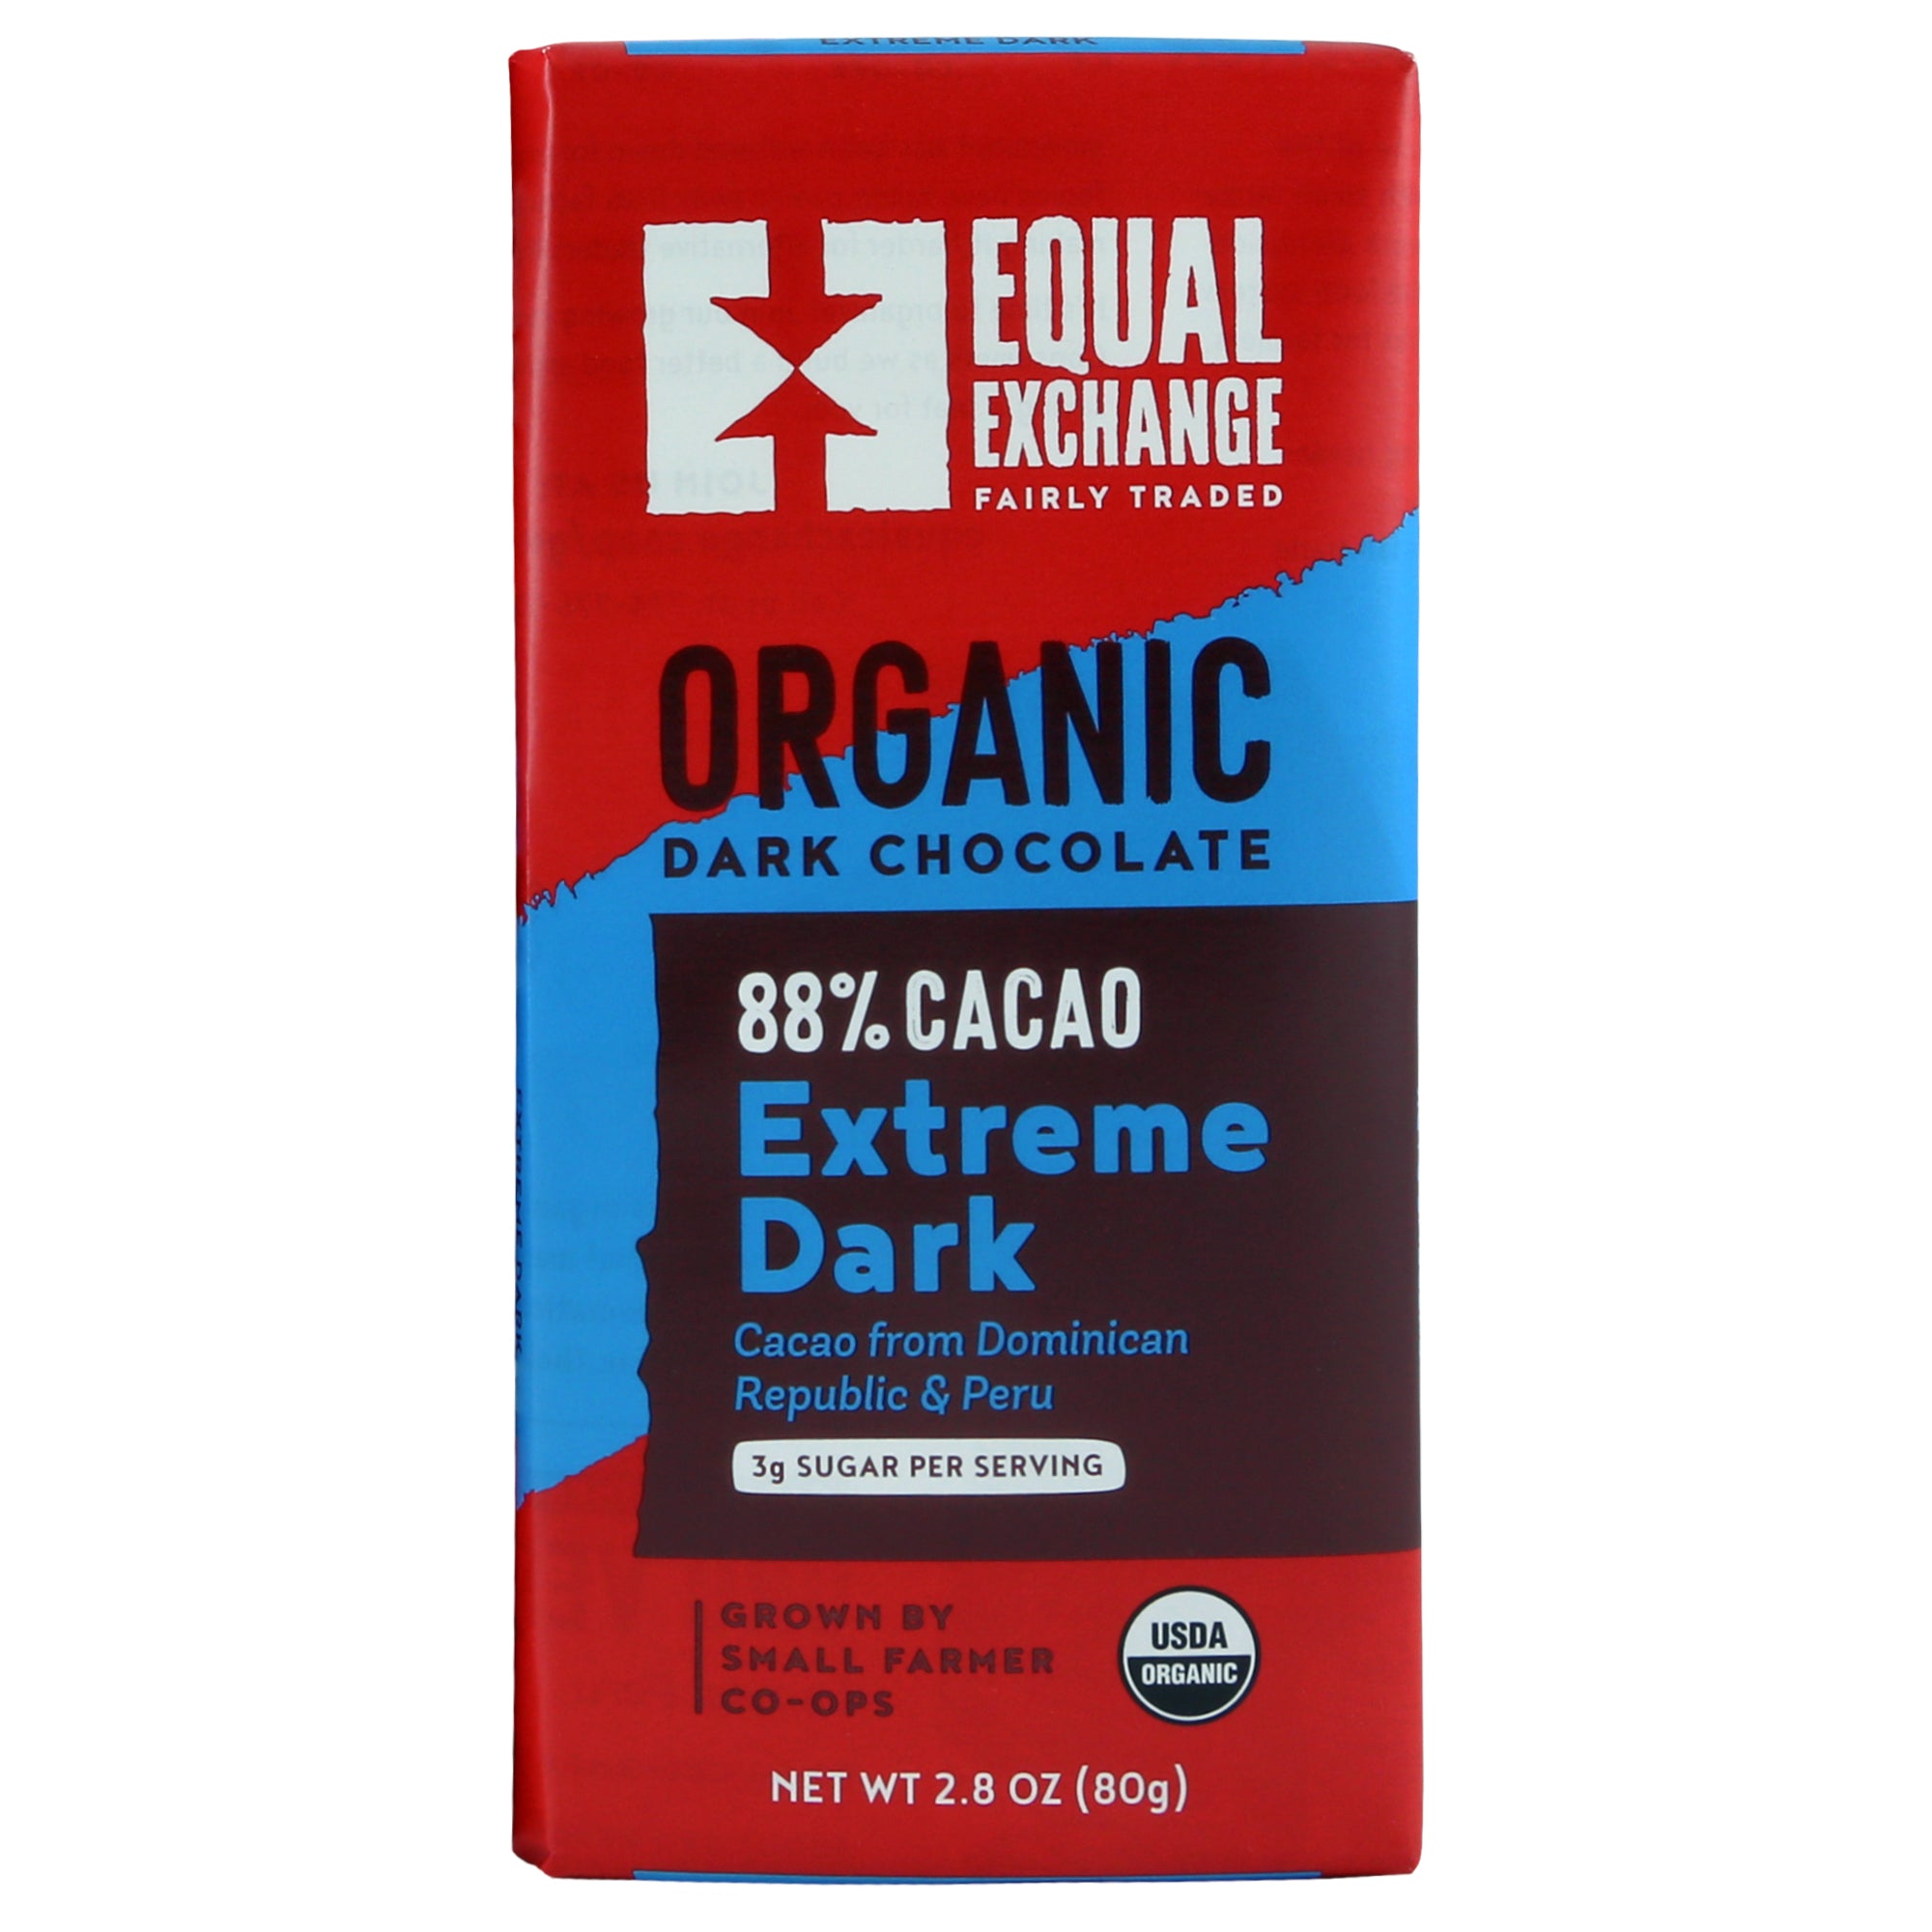 Organic Extreme Dark Chocolate - Equal Exchange - 2.8 oz